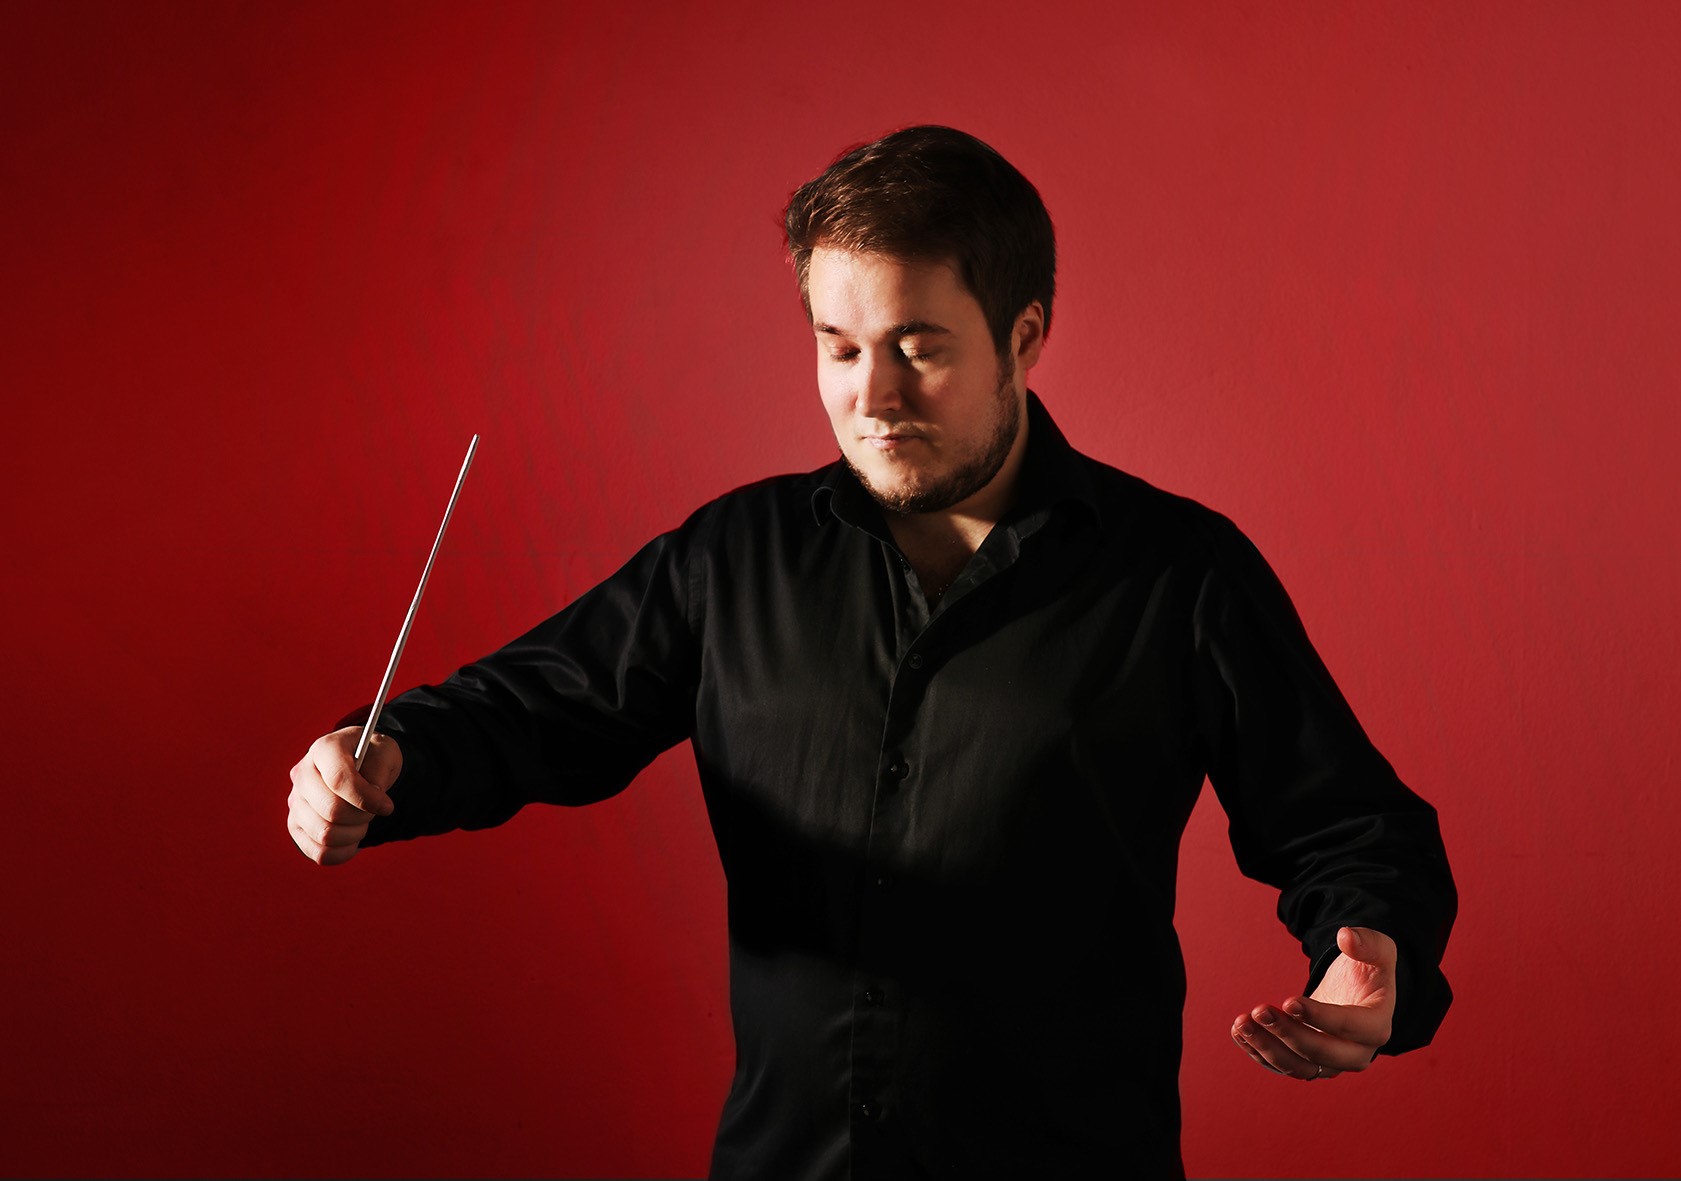 Conductor Erkki Lasonpalo as artistic director of Mikkeli Music Festival